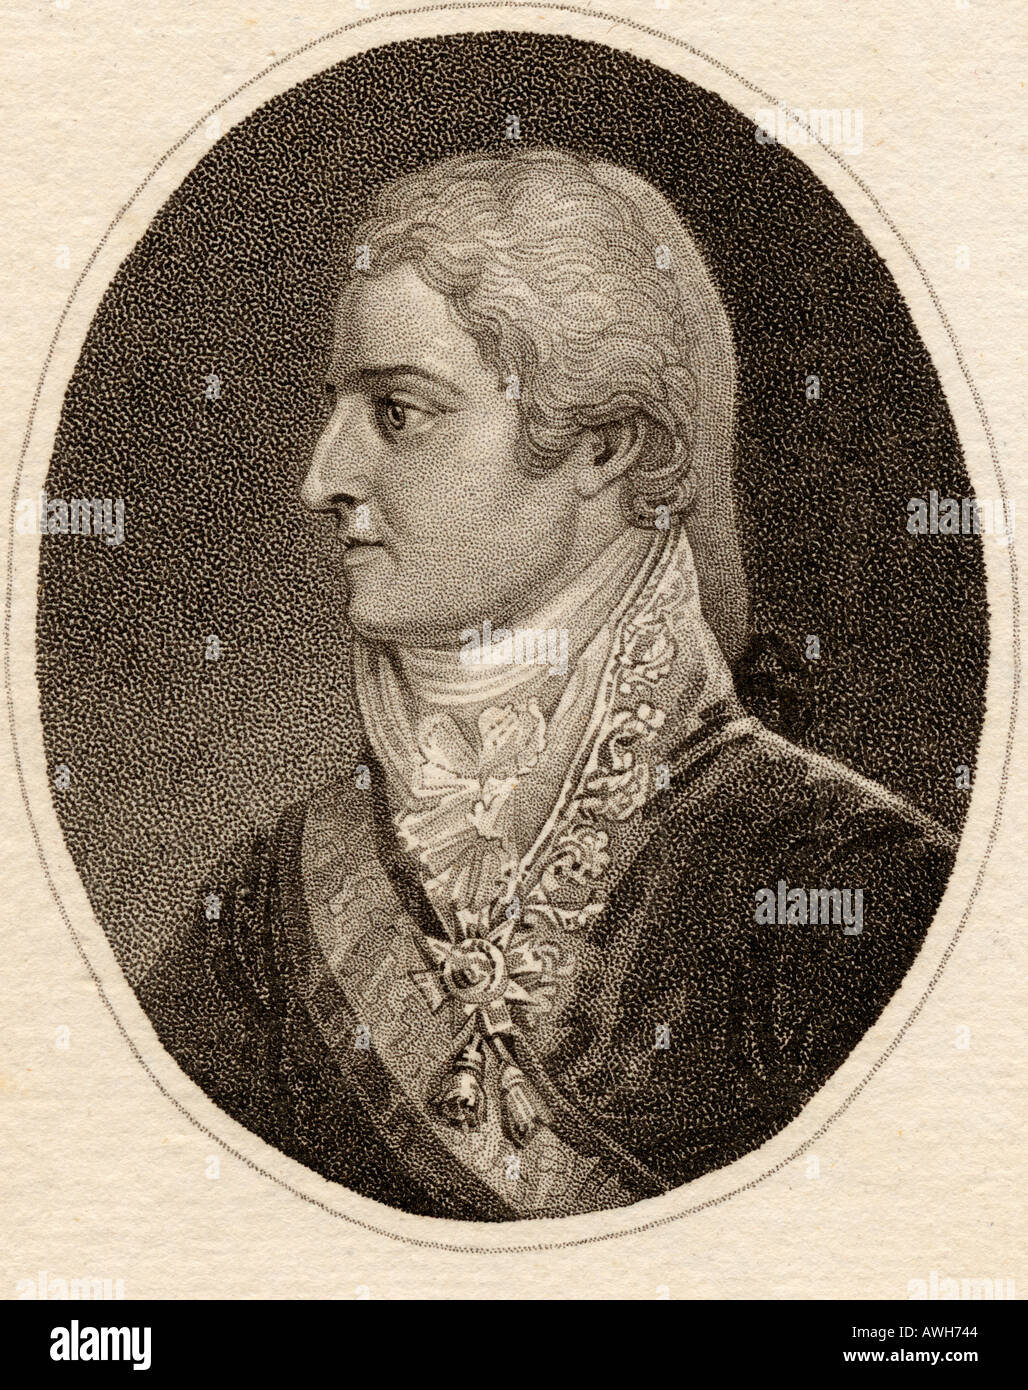 Ferdinand VII, 1784 - 1833, aka Ferdinand the Desired. King of Spain, 1808 - 1833. Stock Photo